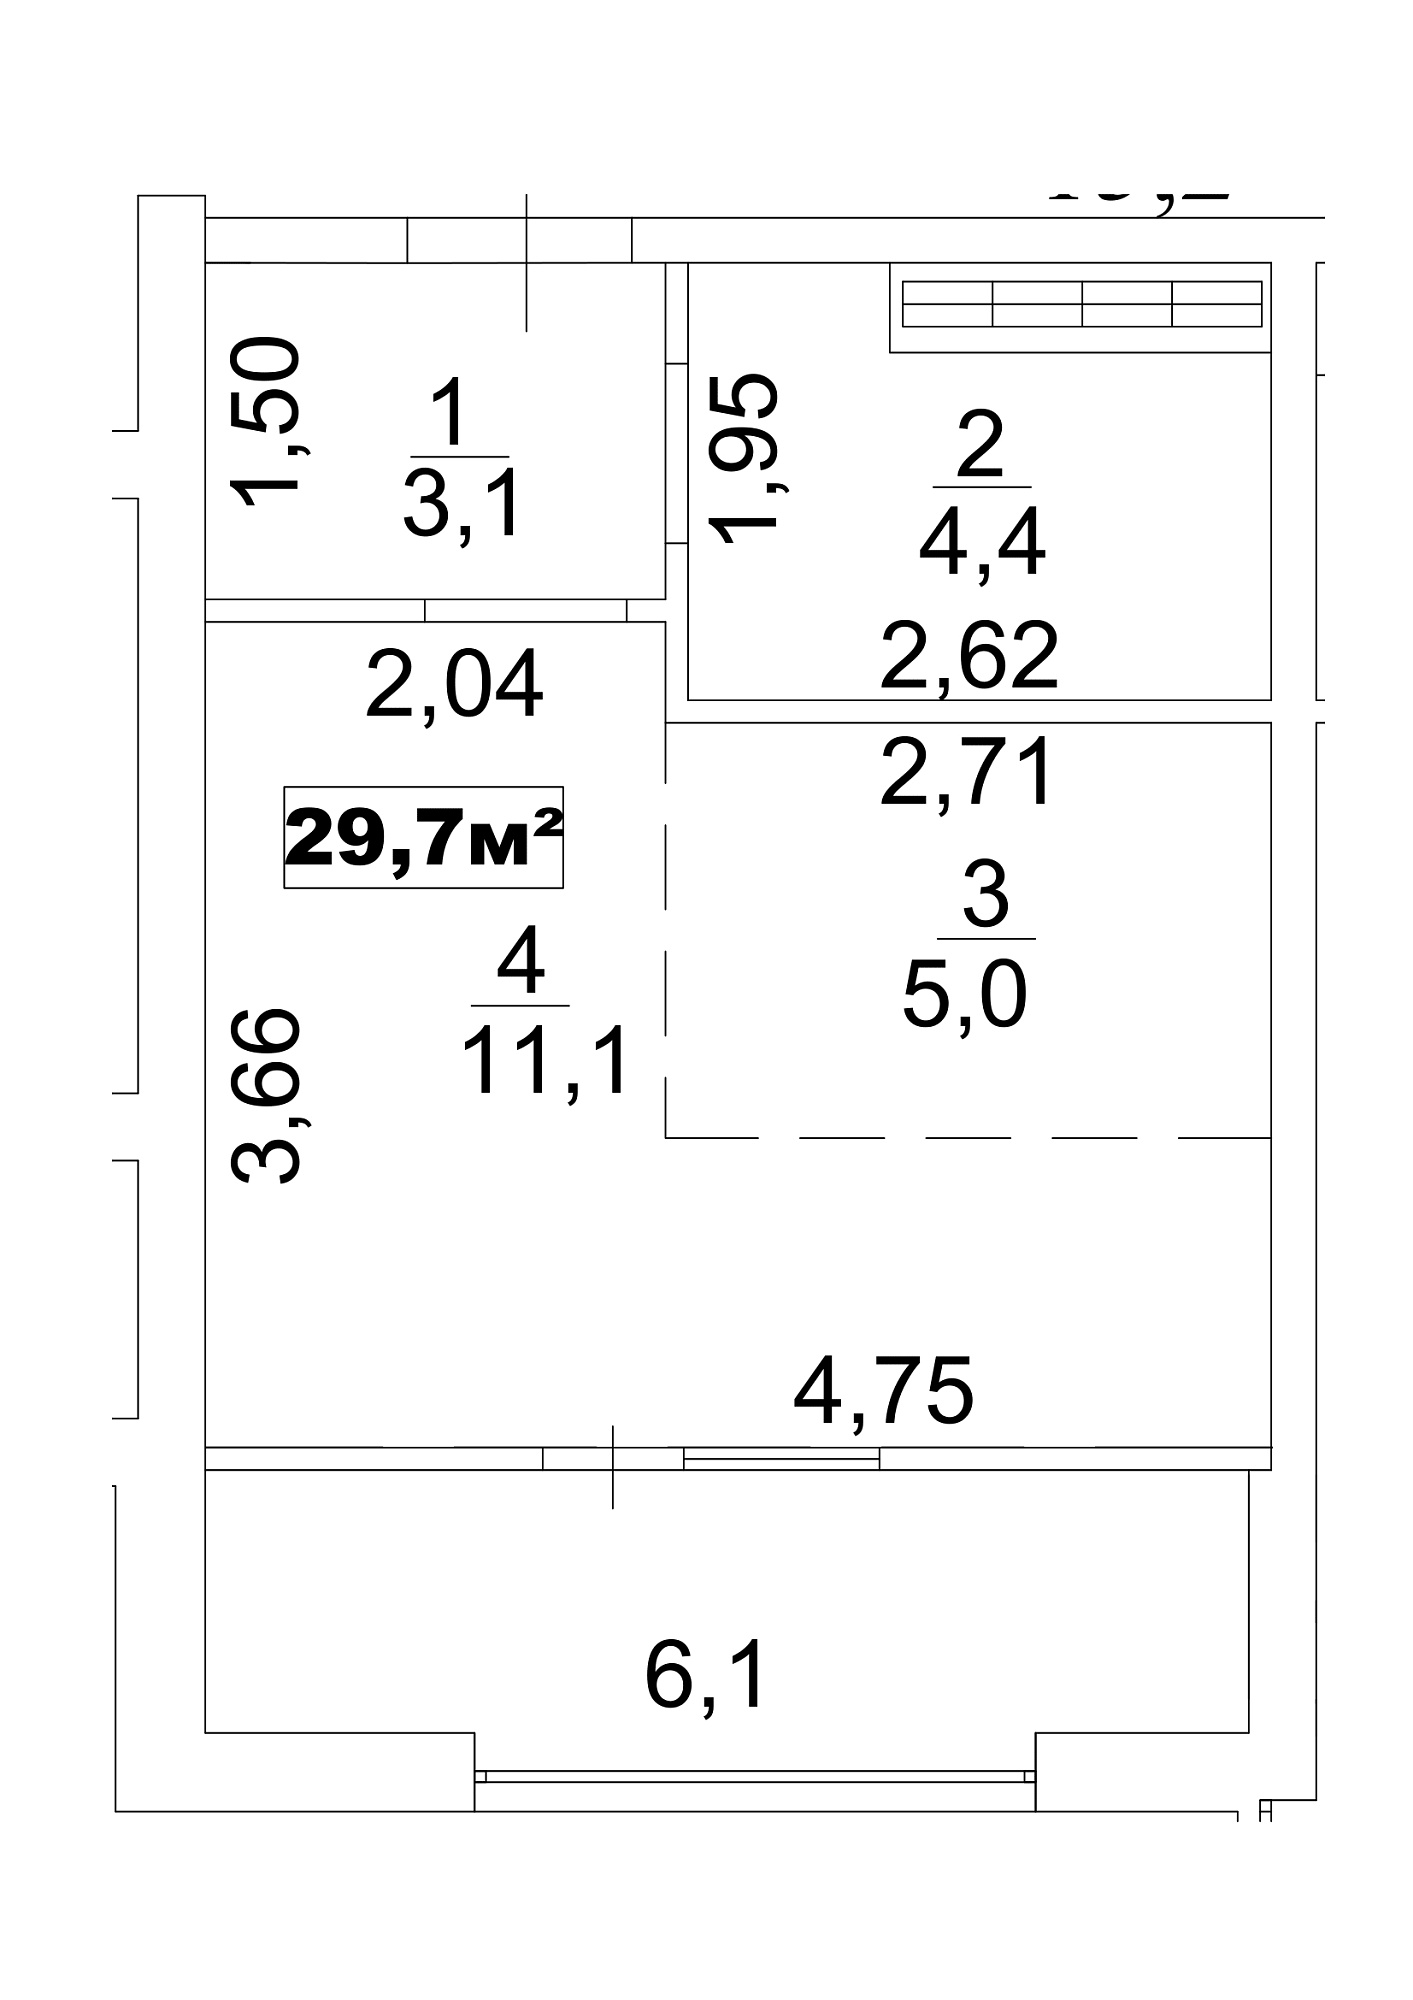 Planning Smart flats area 29.7m2, AB-13-07/00060.